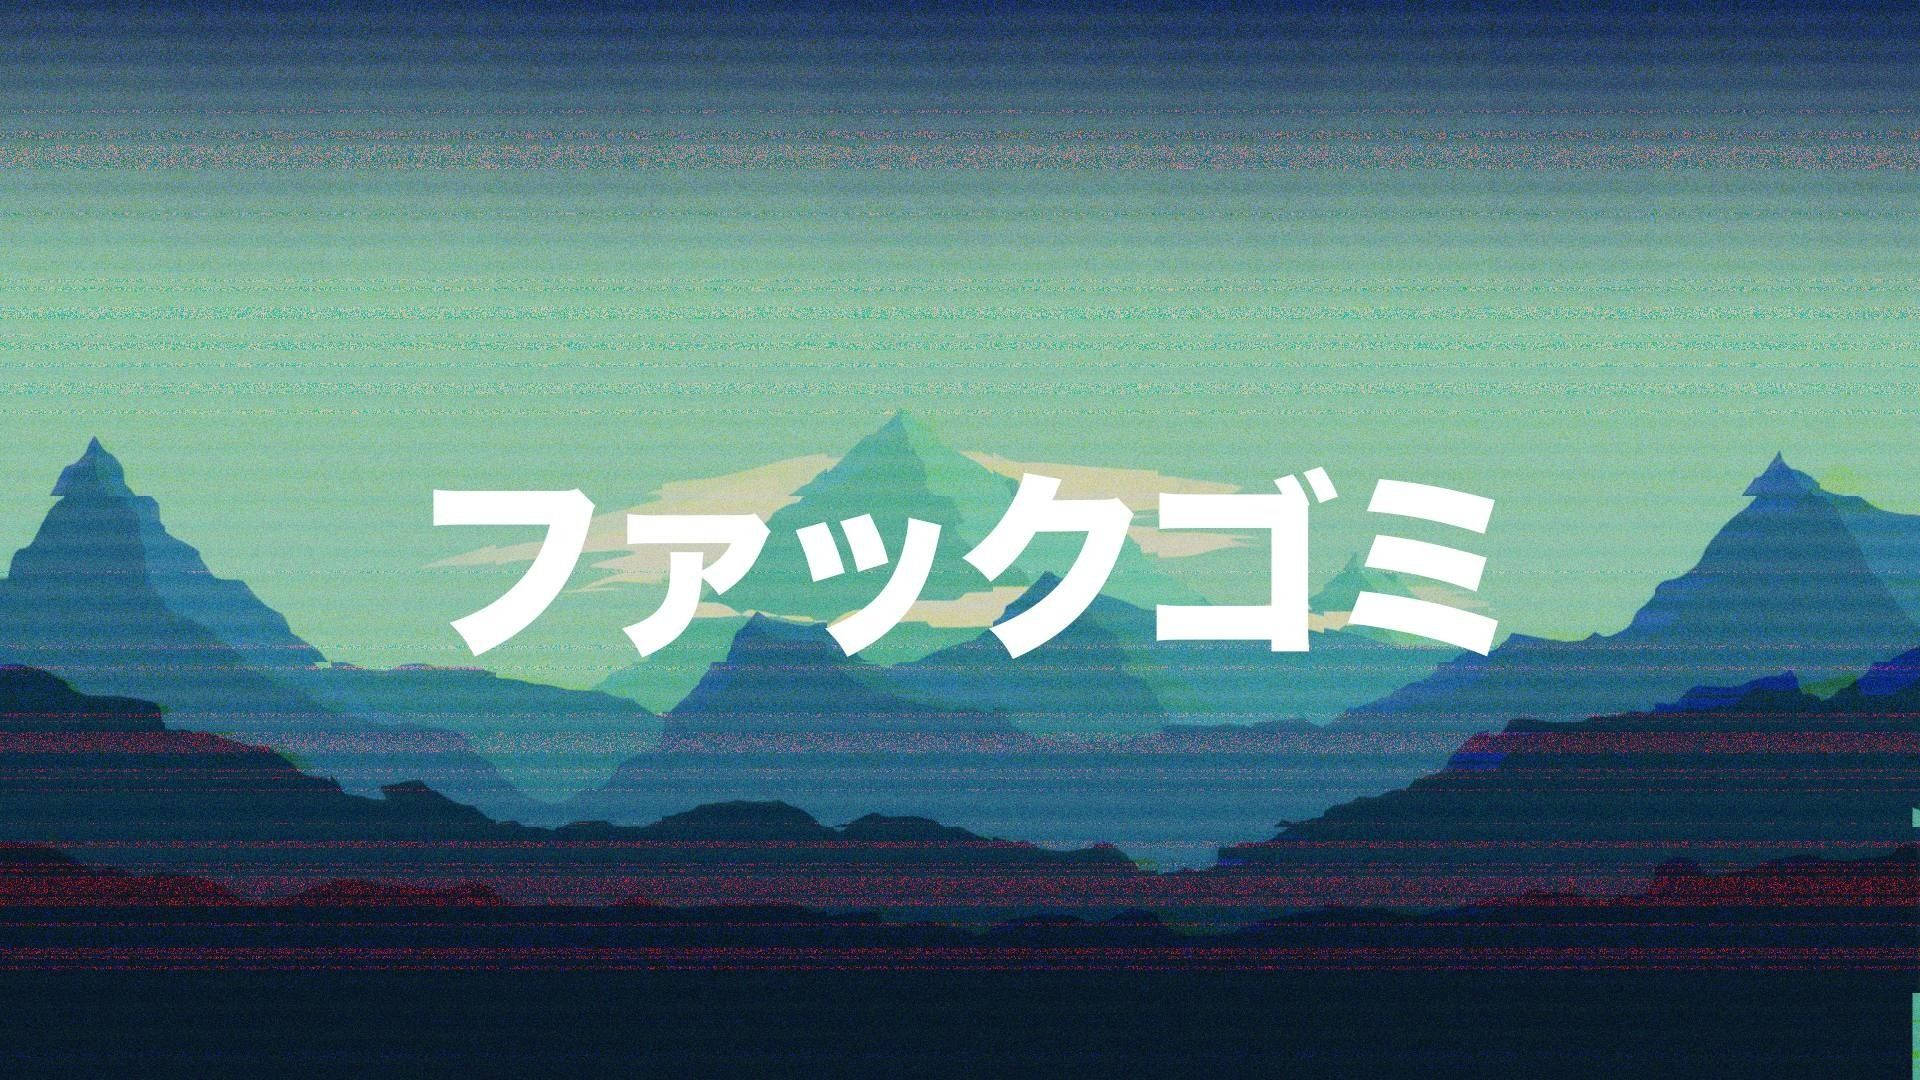 Glitch Typography in Katakana Wallpaper